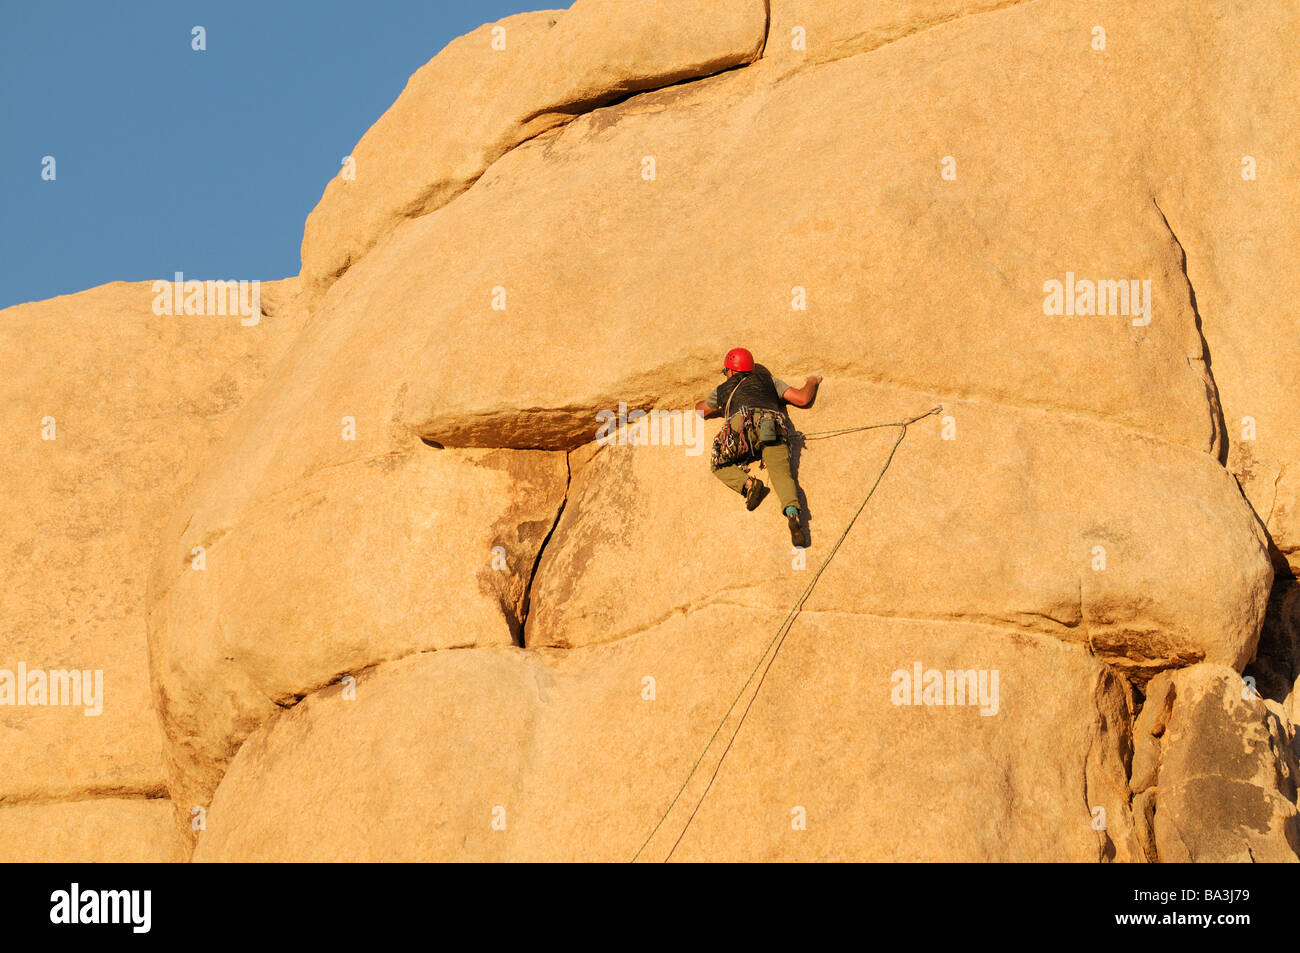 one rock climber man getting ready to climb a rock wall face pinnacle Hidden Valley Joshua Tree National Park Stock Photo